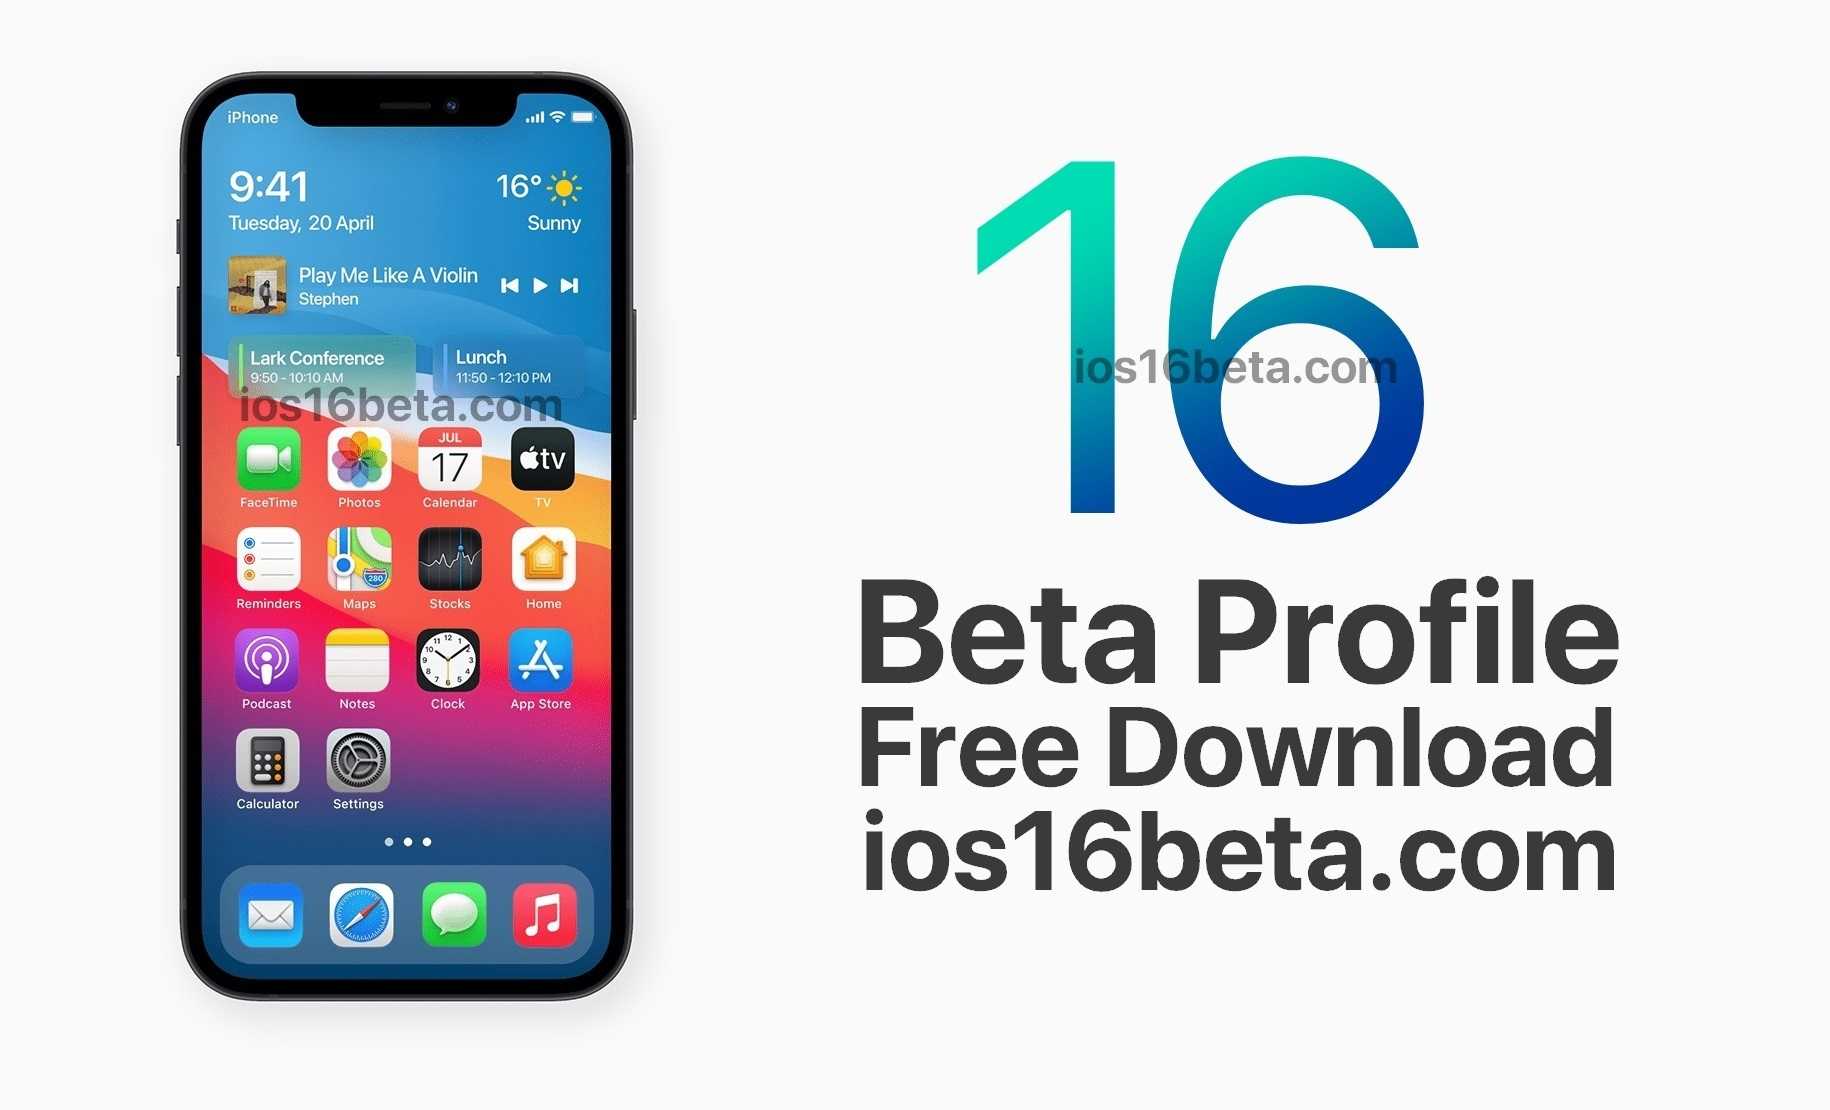 России ios 16. IOS 16. IOS 16 Beta. IOS 16 логотип. IOS 16 Beta profile.